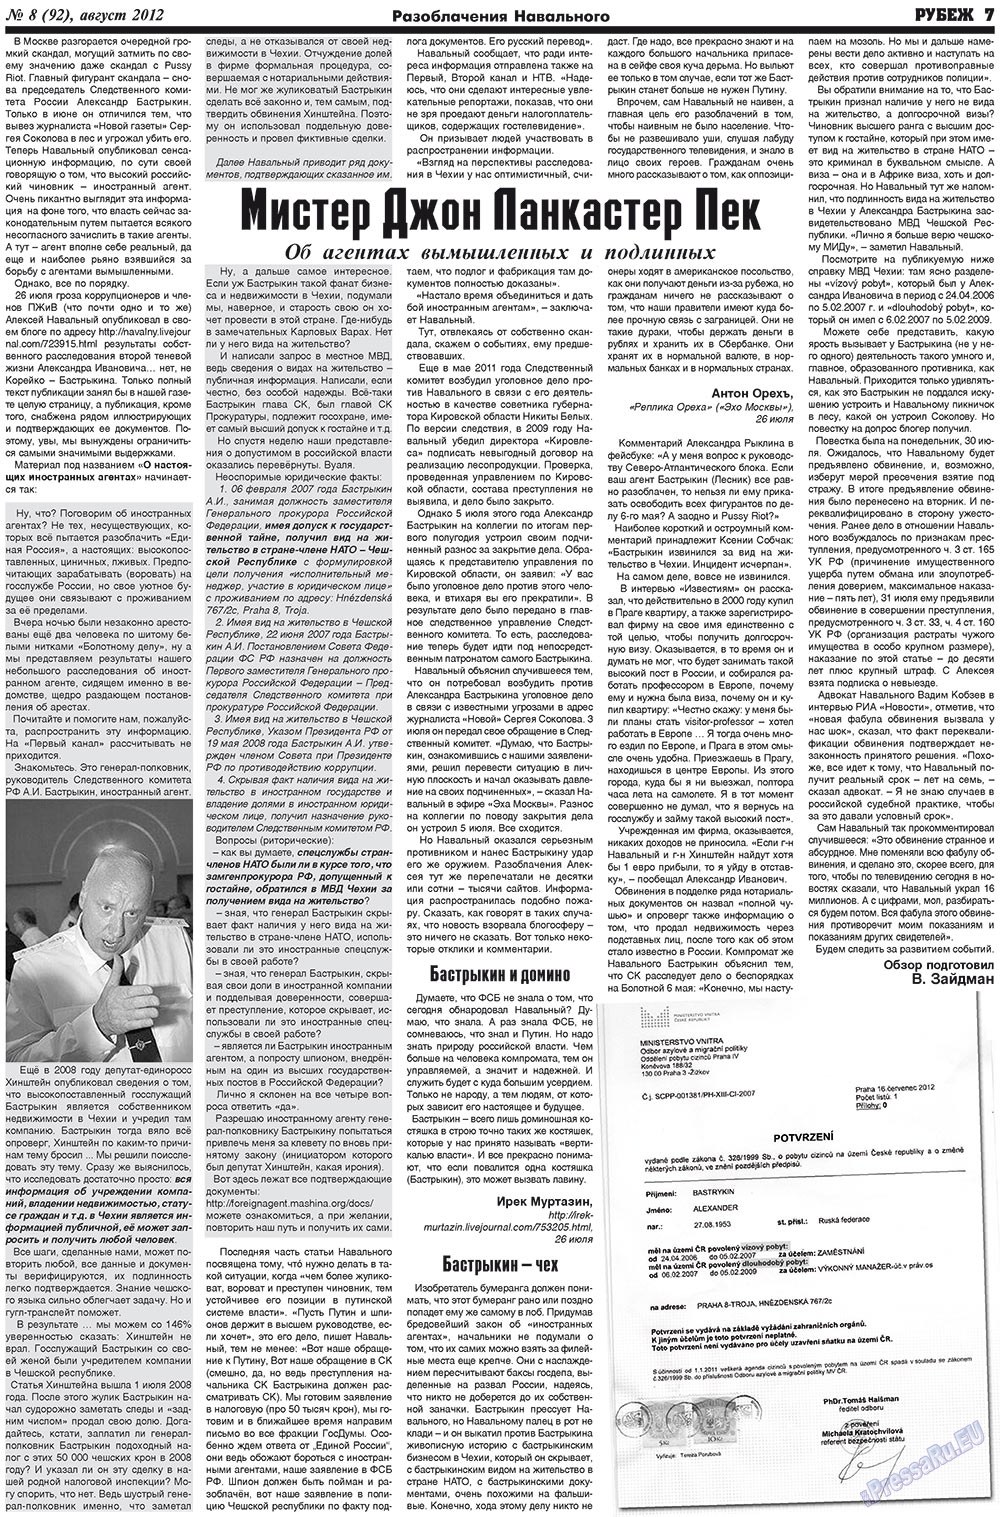 Рубеж, газета. 2012 №8 стр.7